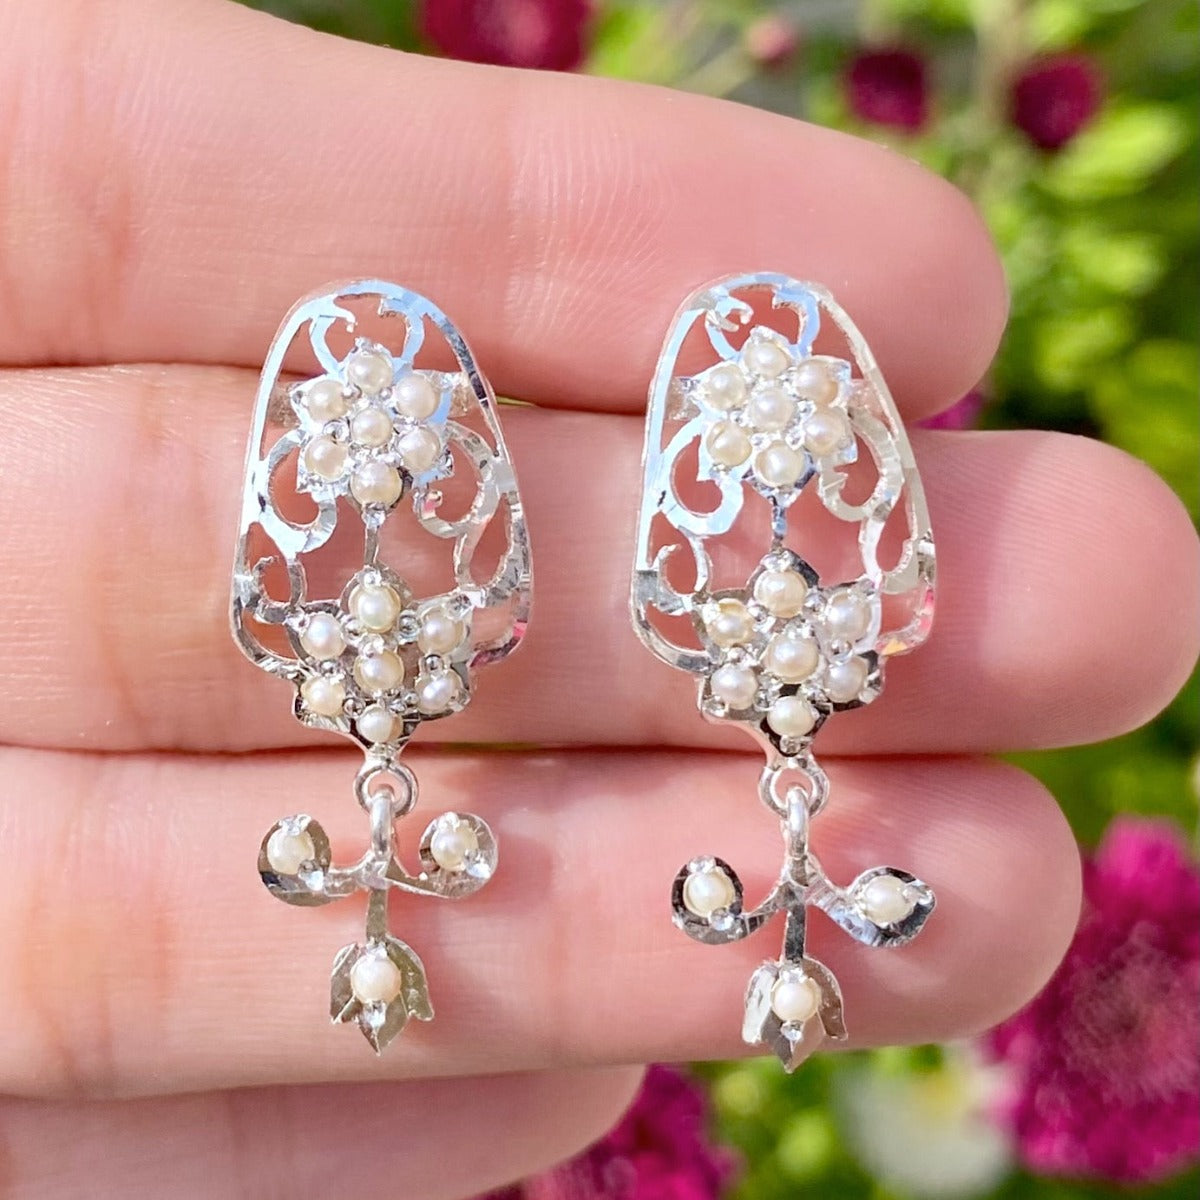 Edwardian Victorian Inspired Jewelry | Indian Earrings